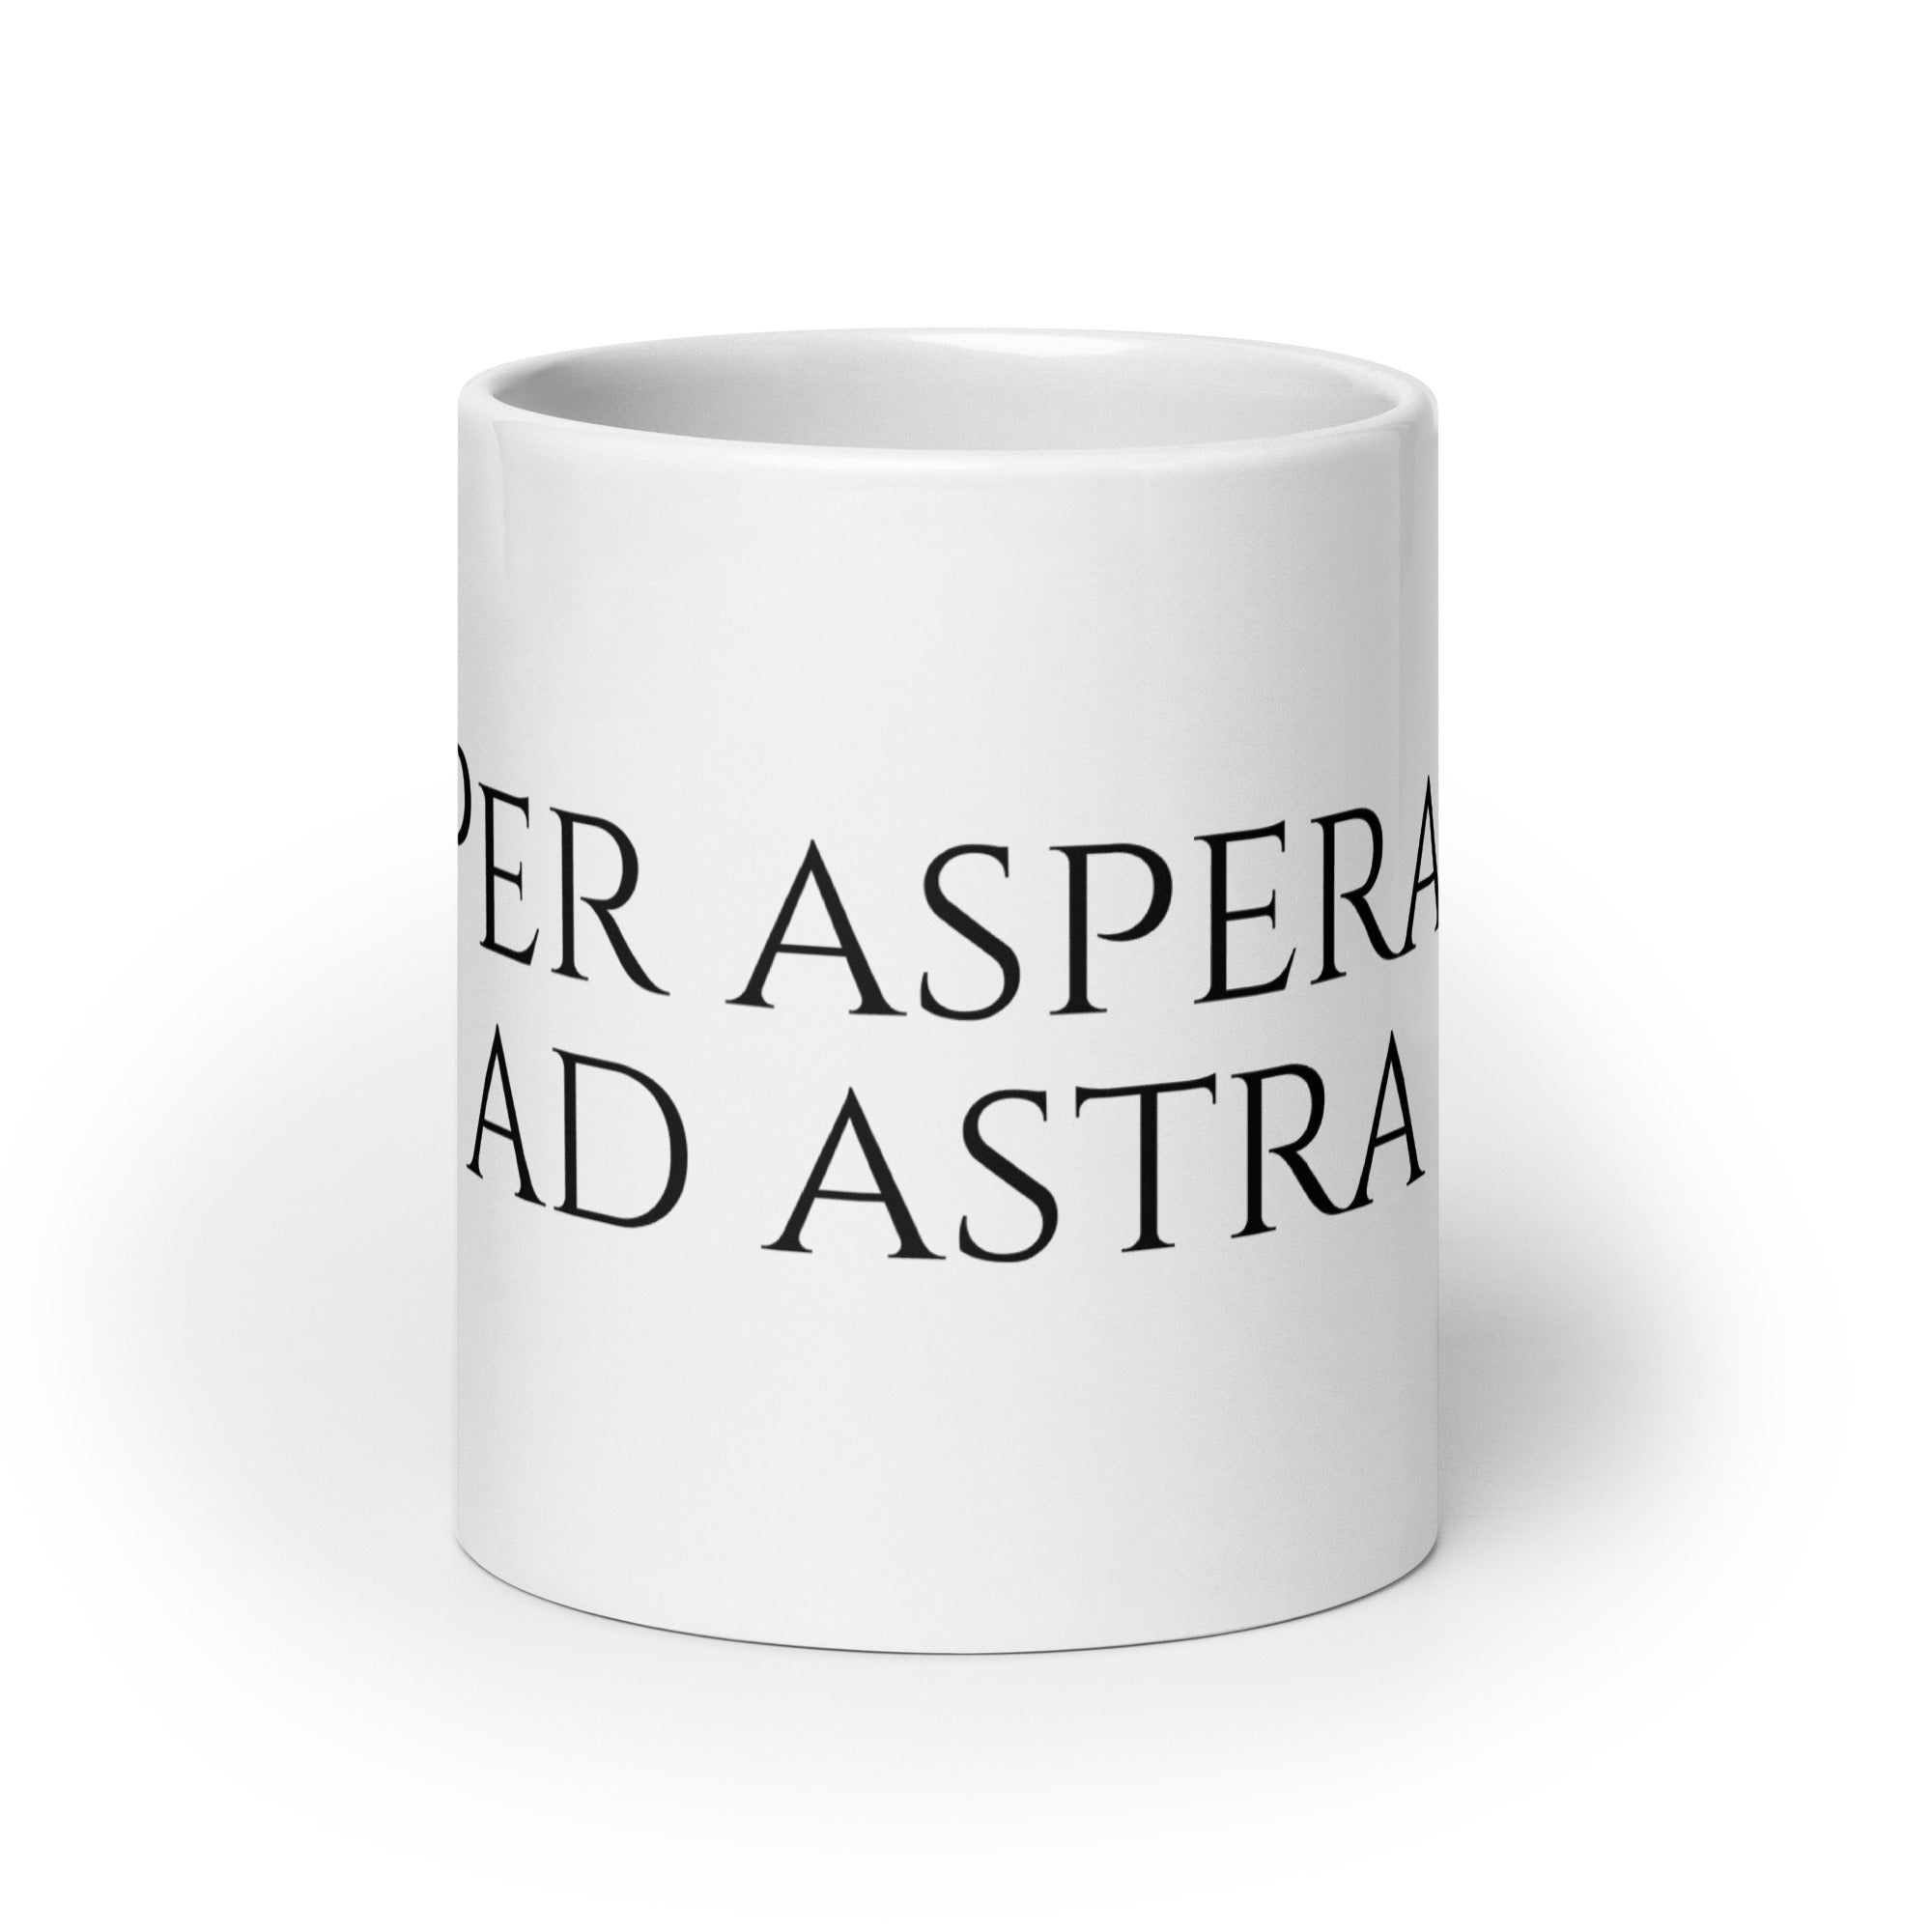 Per Aspera Ad Astra - Motivational Latin Language Coffee Mug